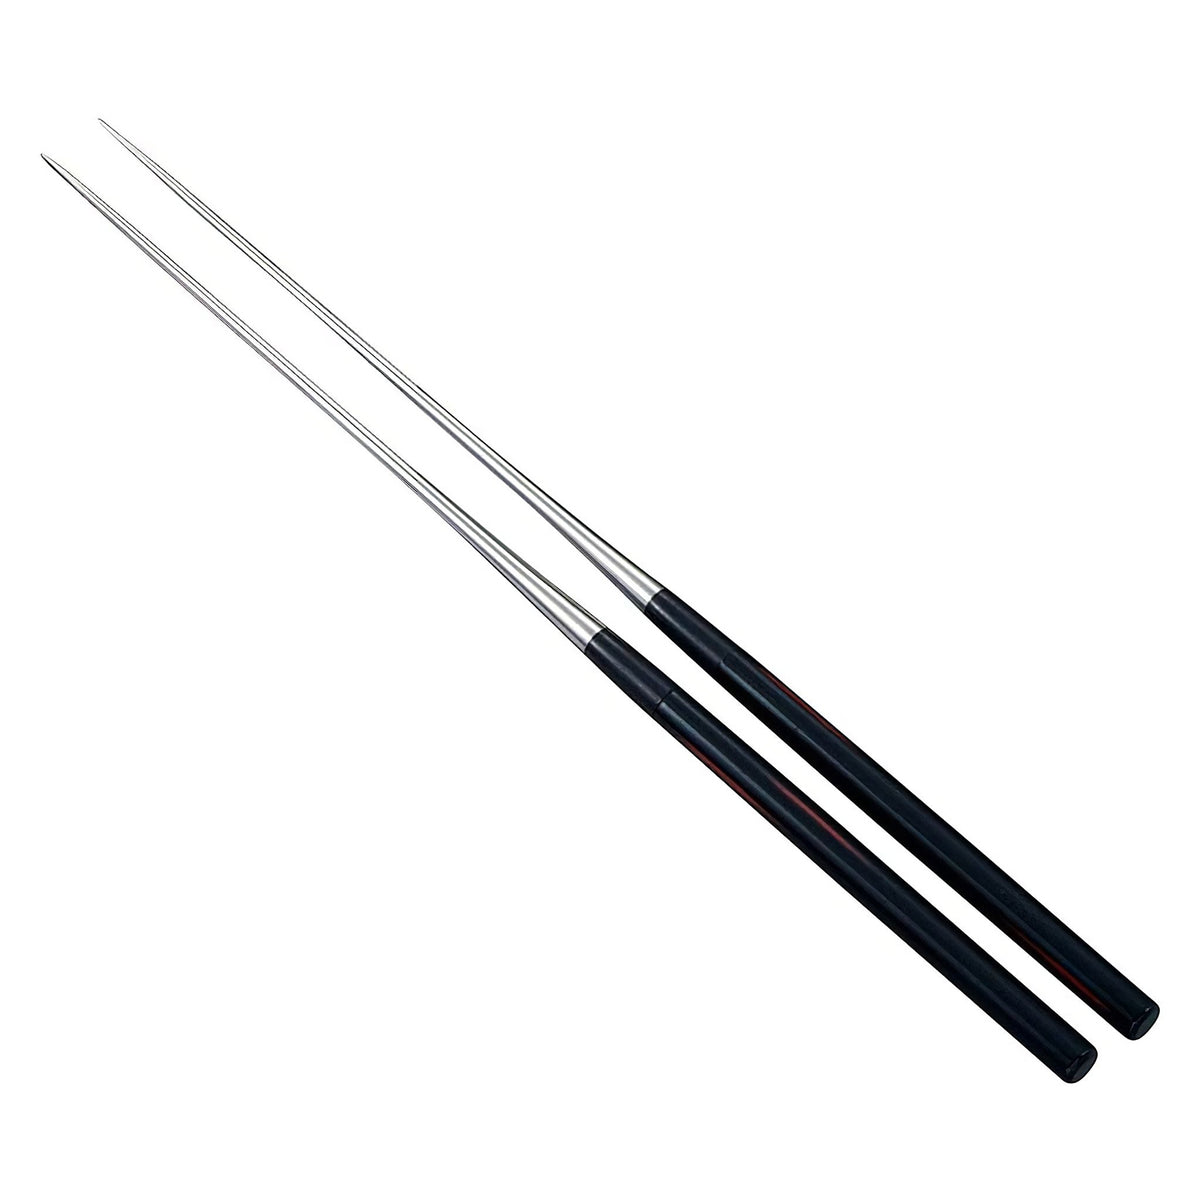 Kanaguchi Stainless Steel Lacquered Serving Chopsticks